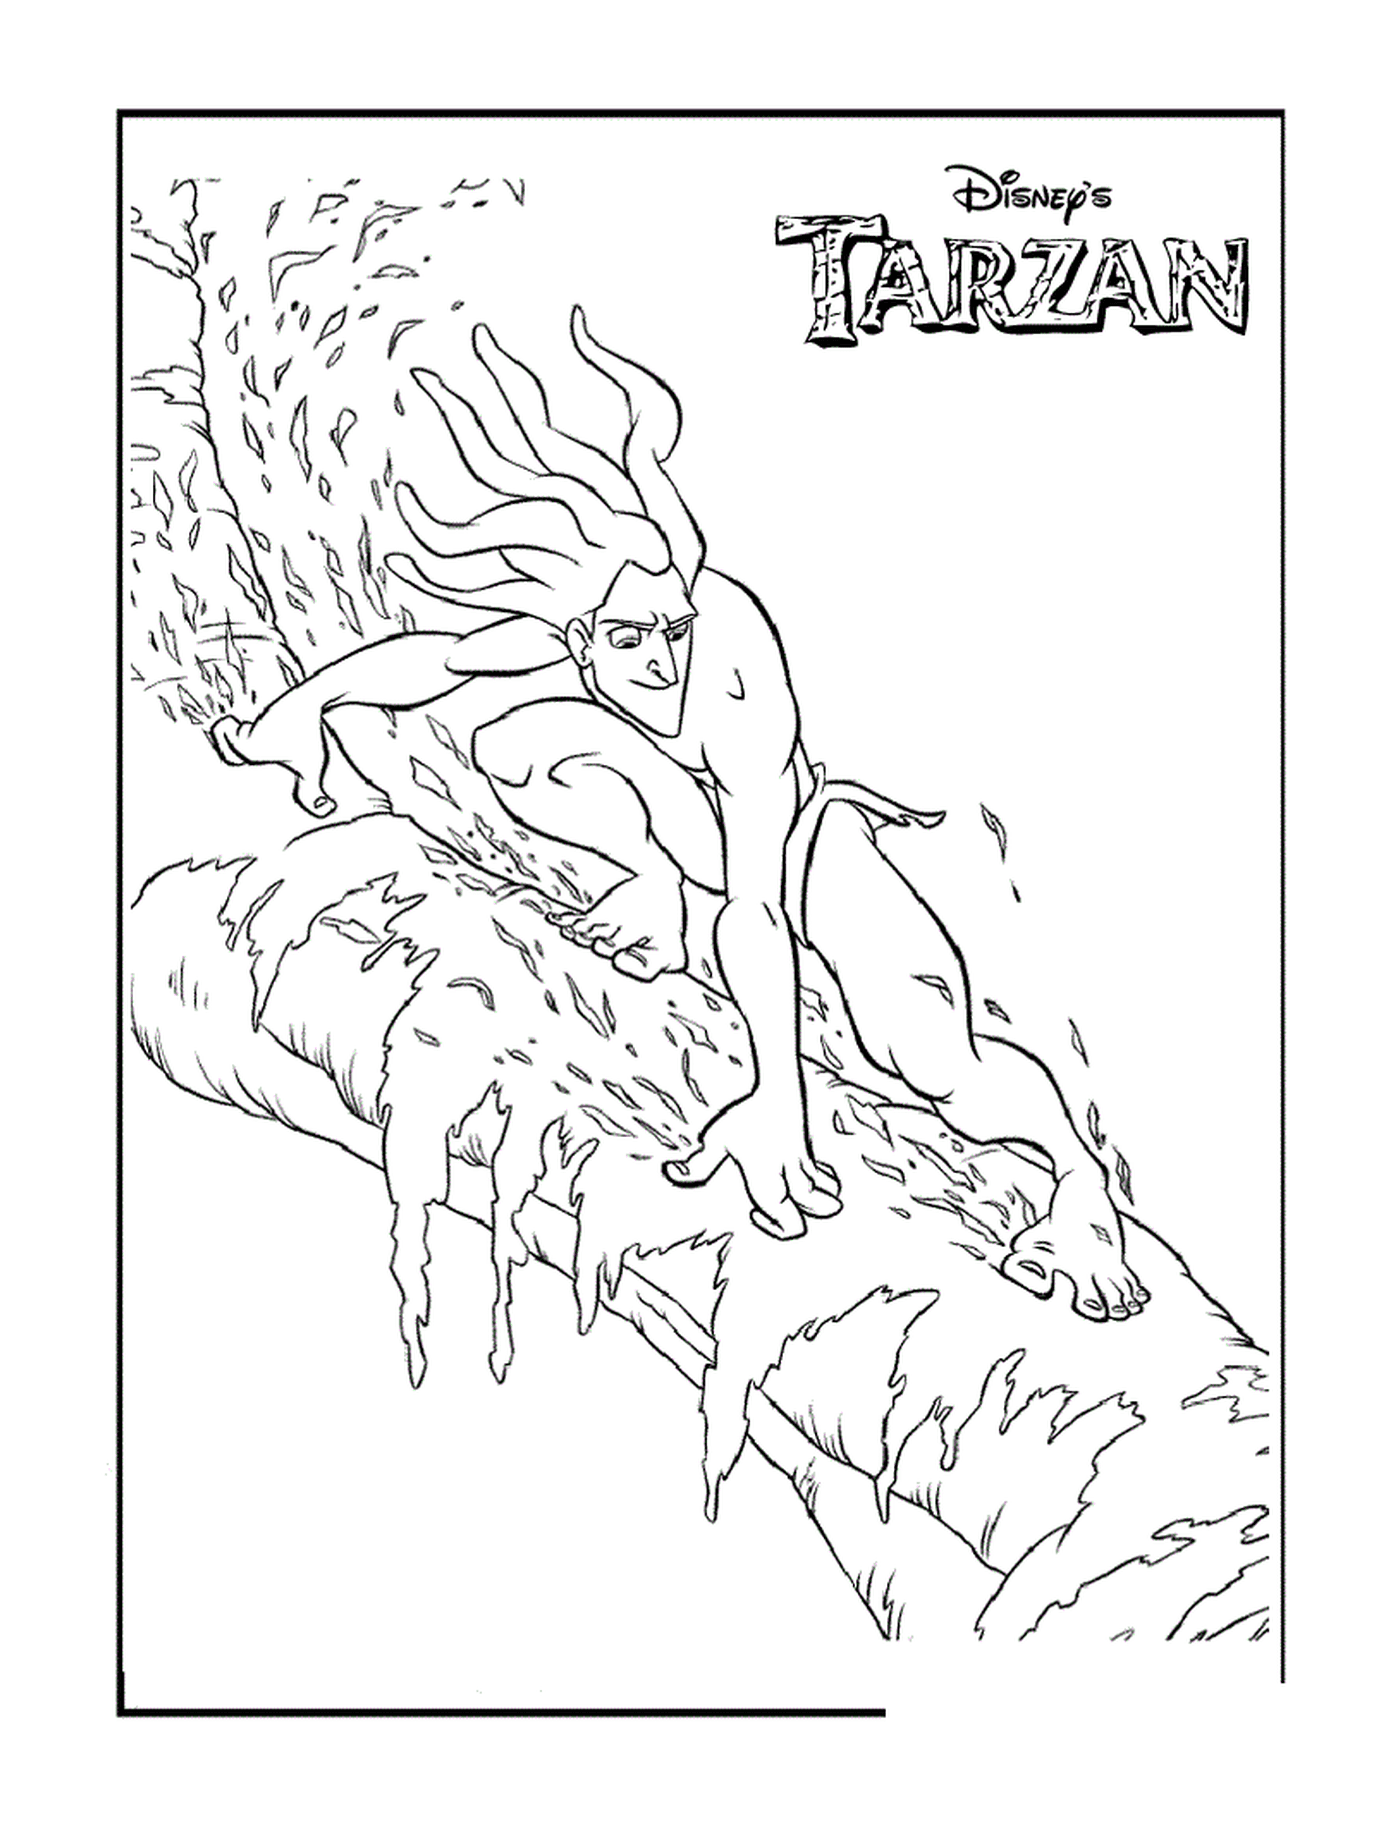   Tarzan s'échappe des lianes 